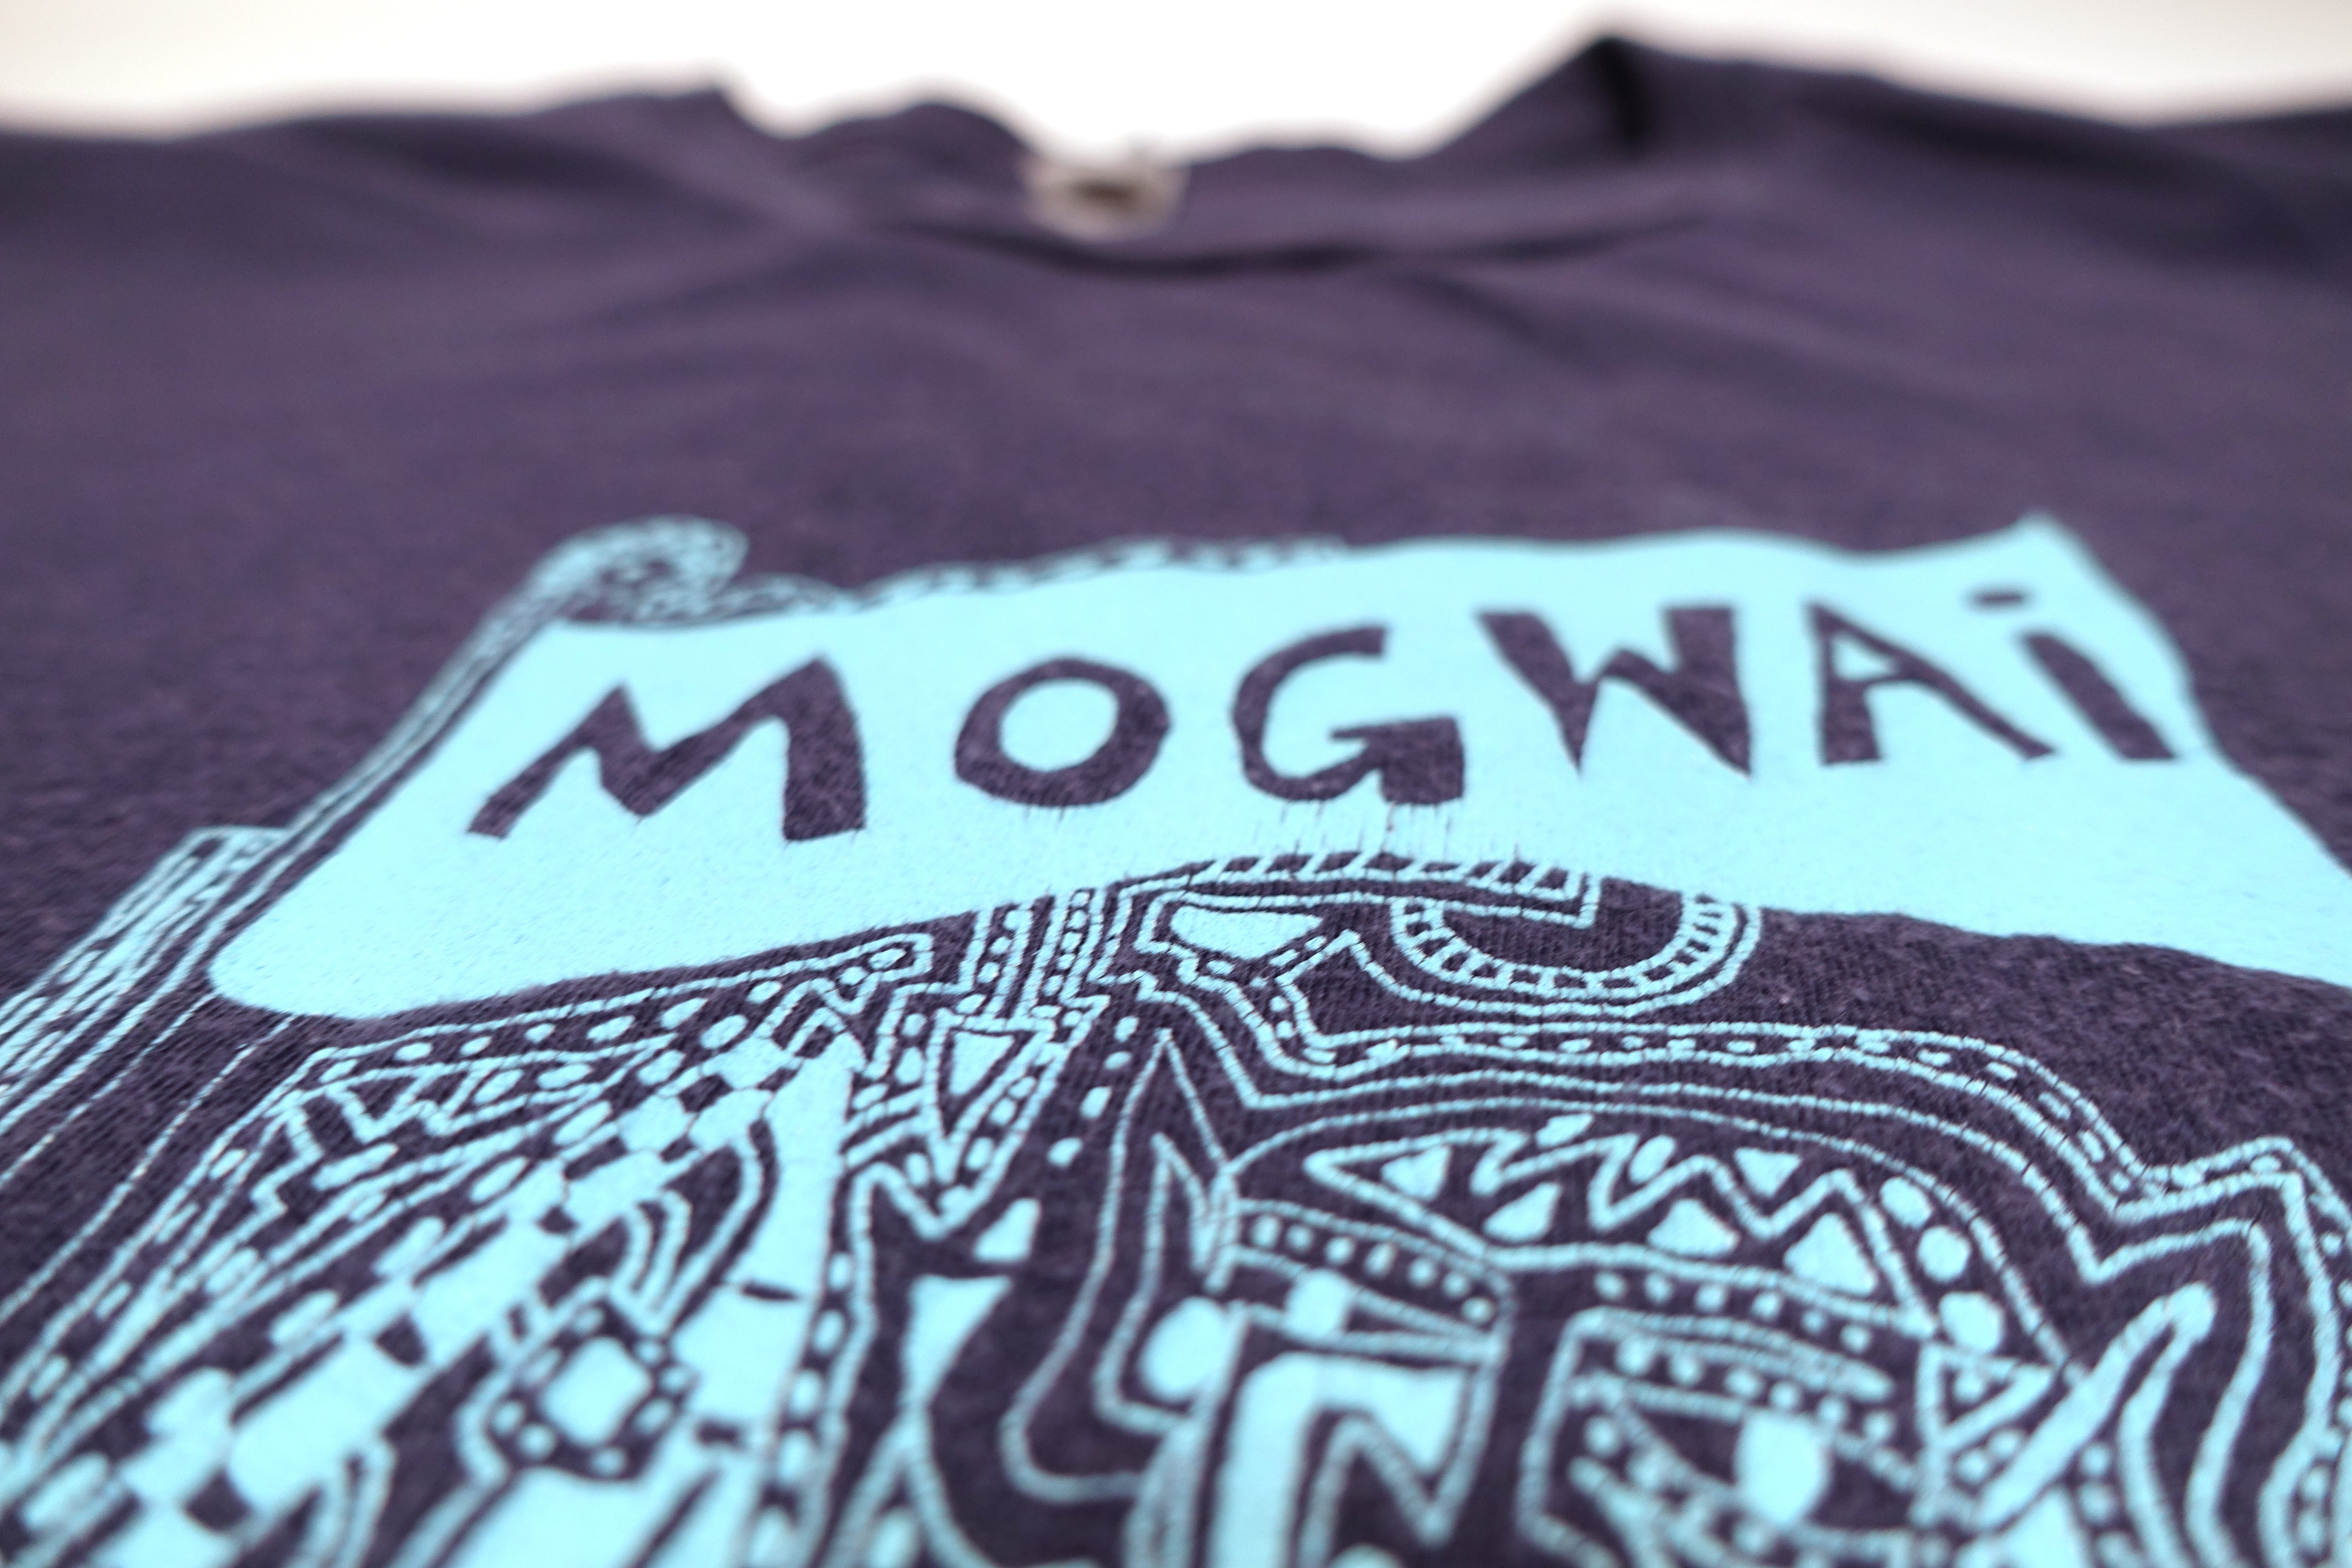 Mogwai ‎– Mr Beast 2006 Tour Shirt Size Large